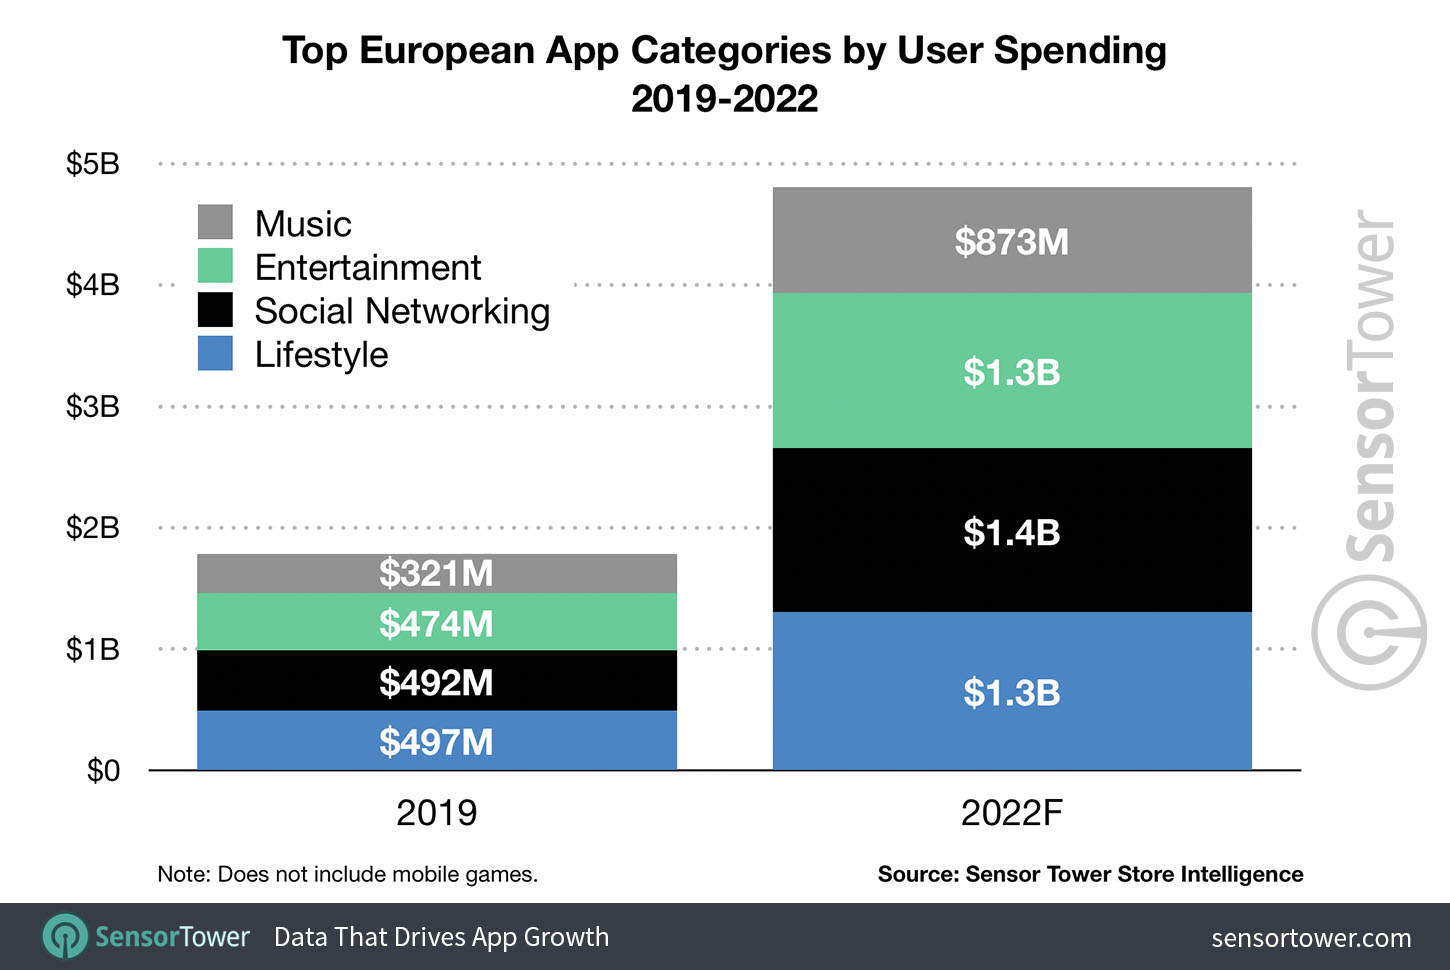 Top European mobile app categories by revenue 2019-2022